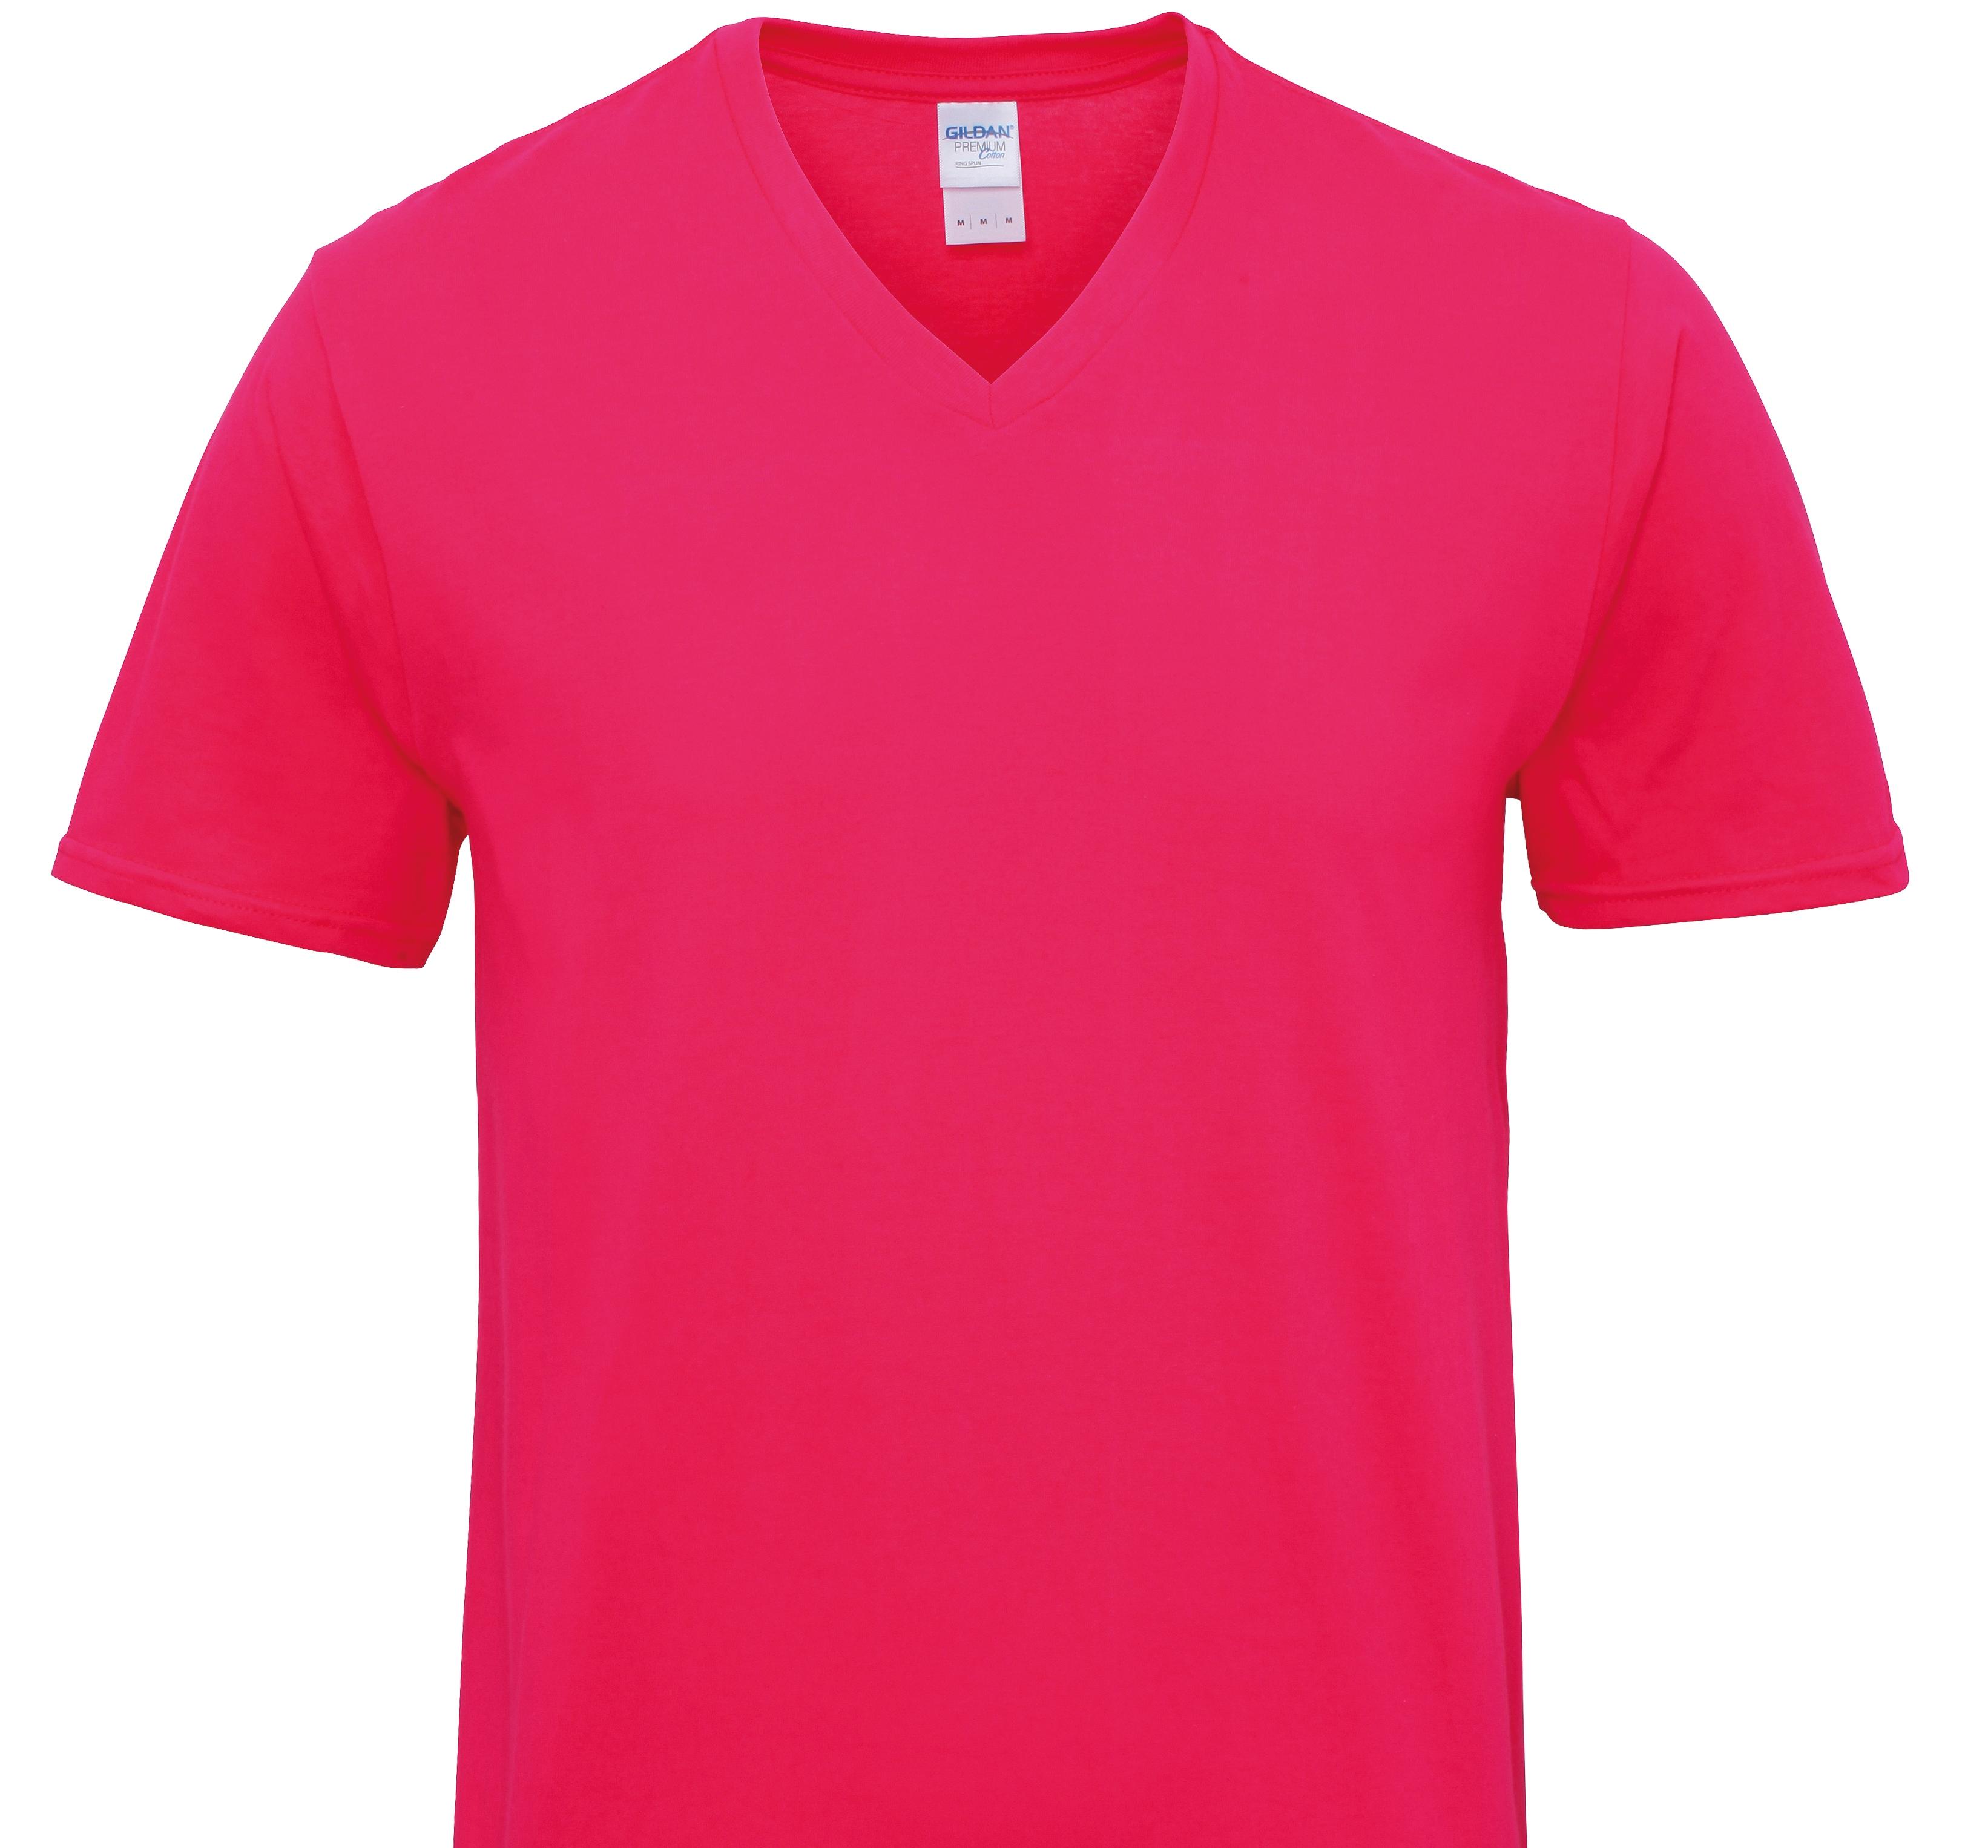 Sprocker T-Shirts Women's V Neck Premium Cotton